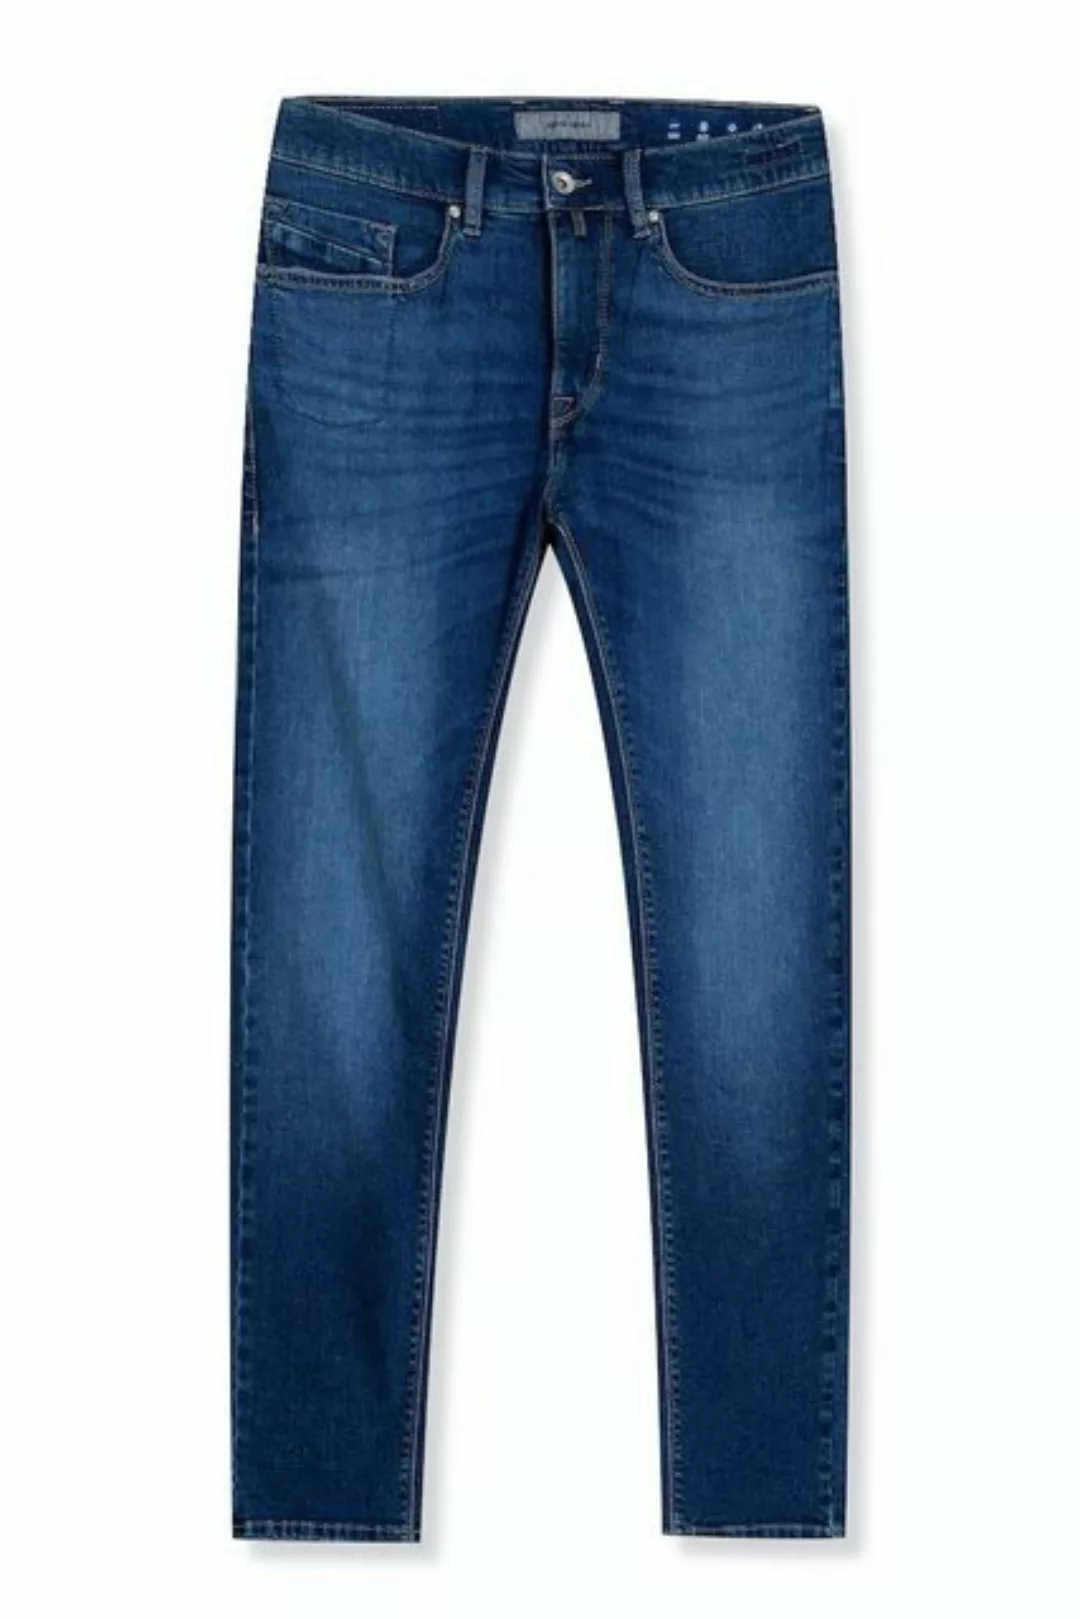 Pierre Cardin Bequeme Jeans Pierre Cardin / He.Jeans / Antibes günstig online kaufen